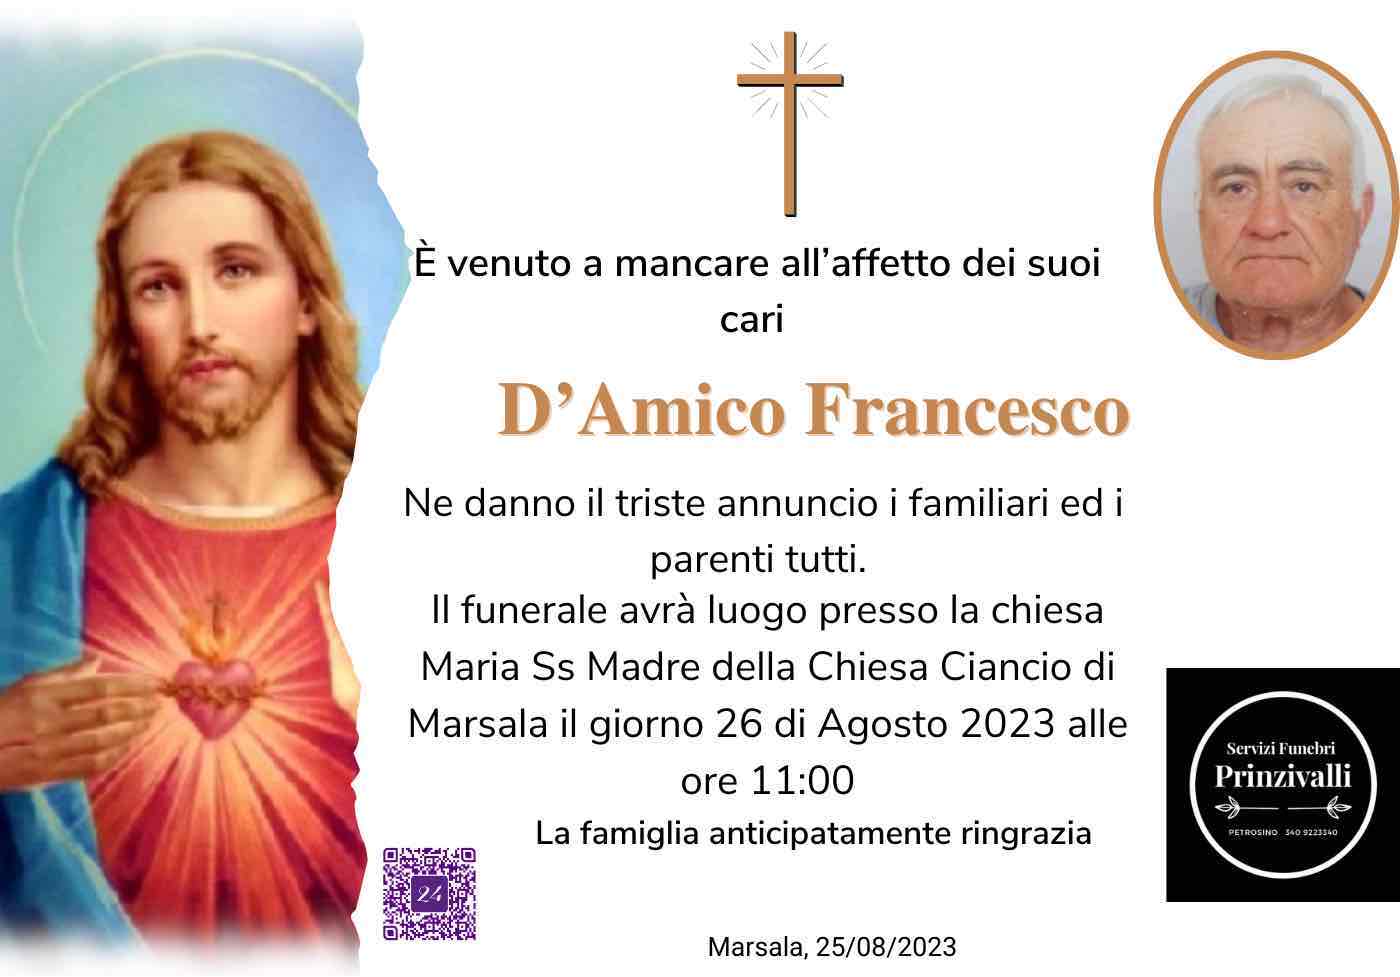 D’Amico Francesco